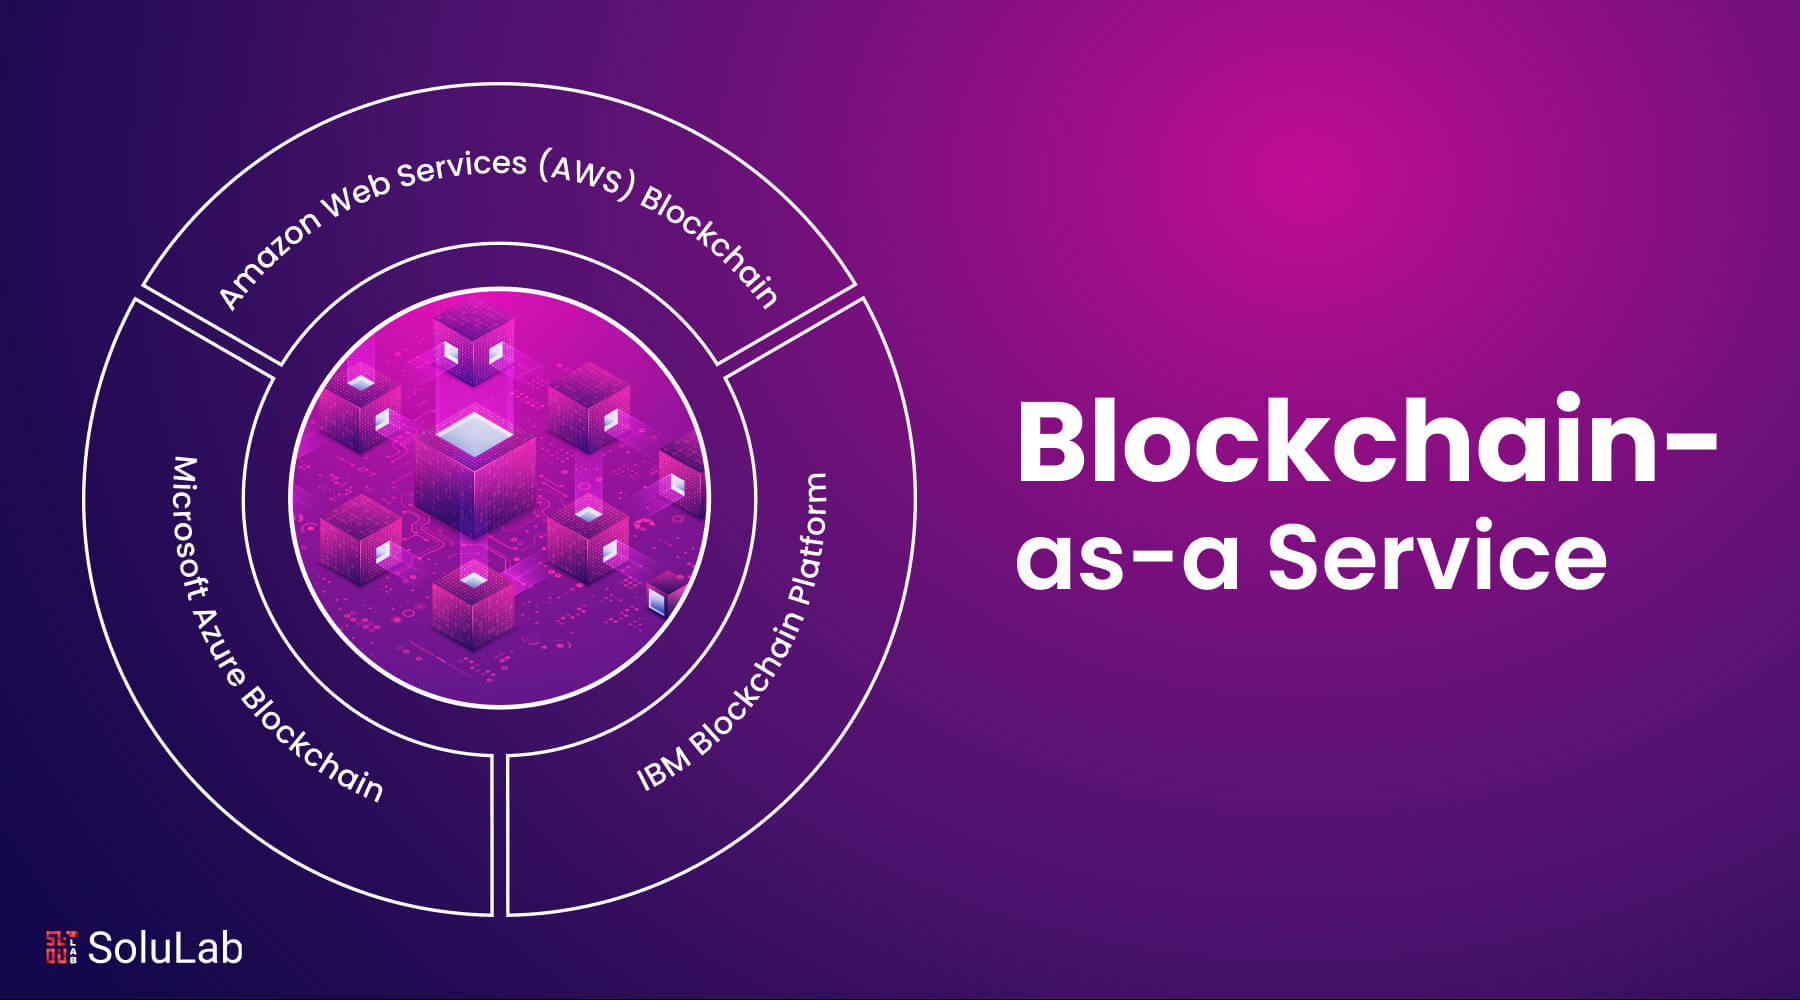 Blockchain-as-a-Service Benefits